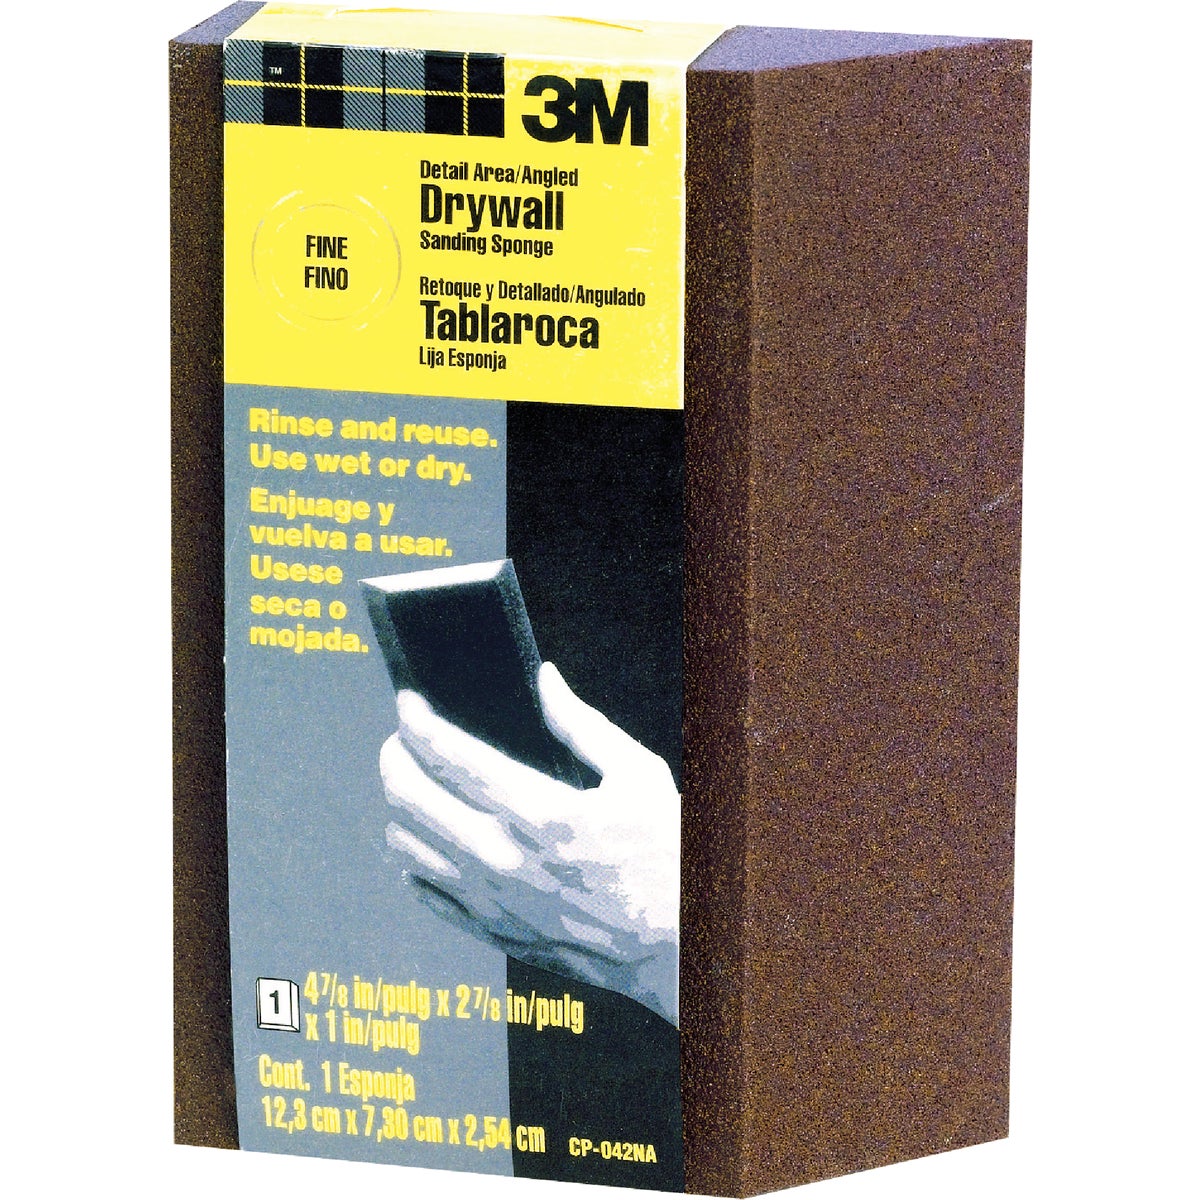 3M Angled Detail Area Drywall 2-7/8 In. x 4-7/8 In. x 1 In. Fine Sanding Sponge